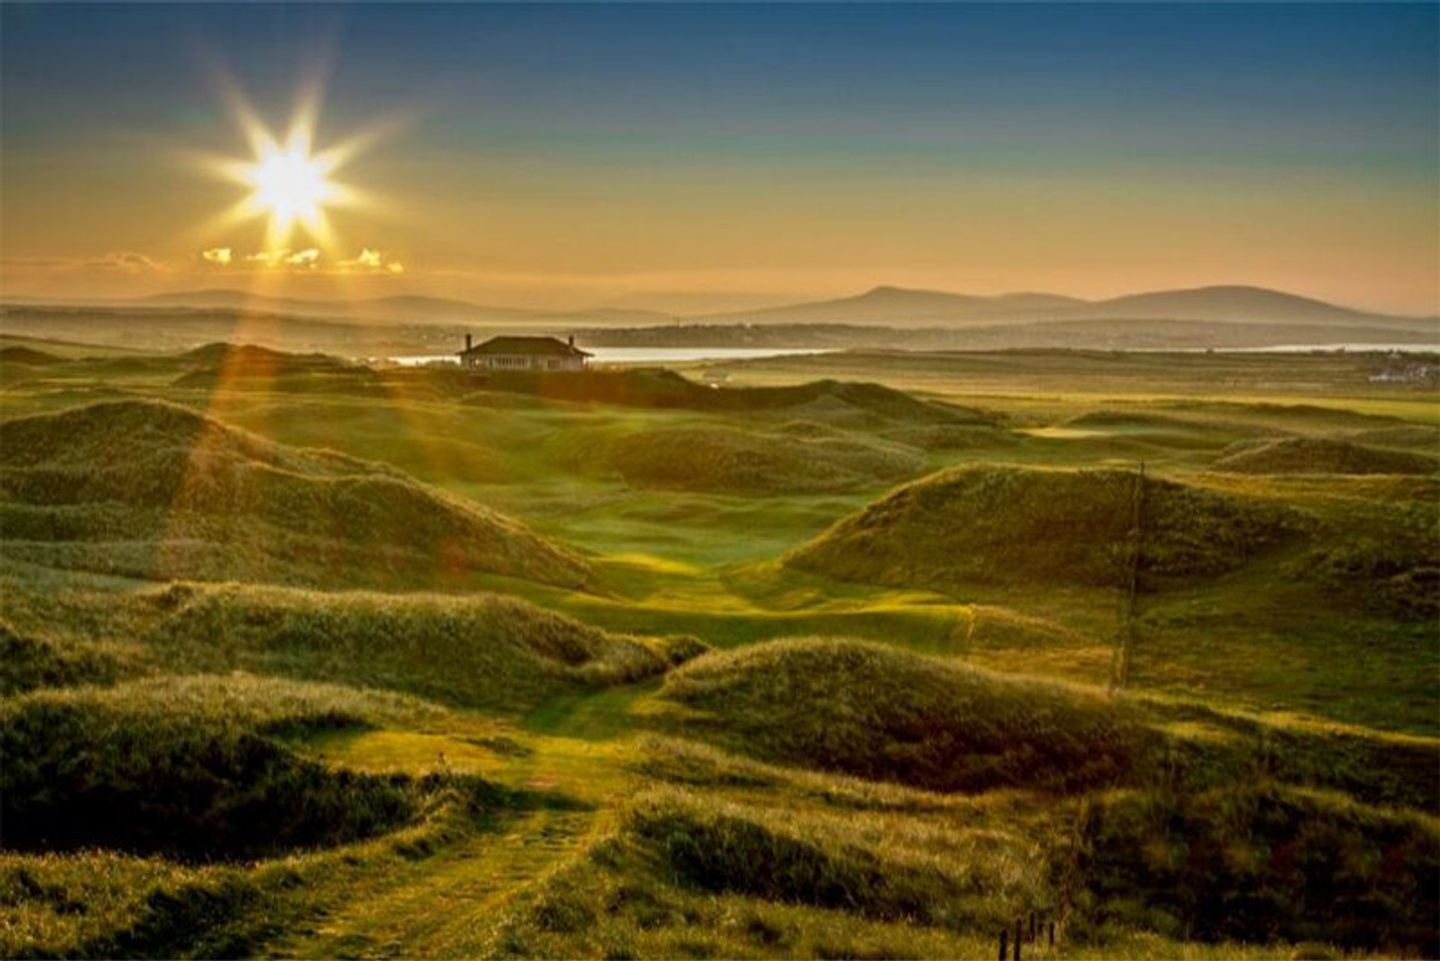 Ireland: Atlantic Coast Golf Challenge 2022